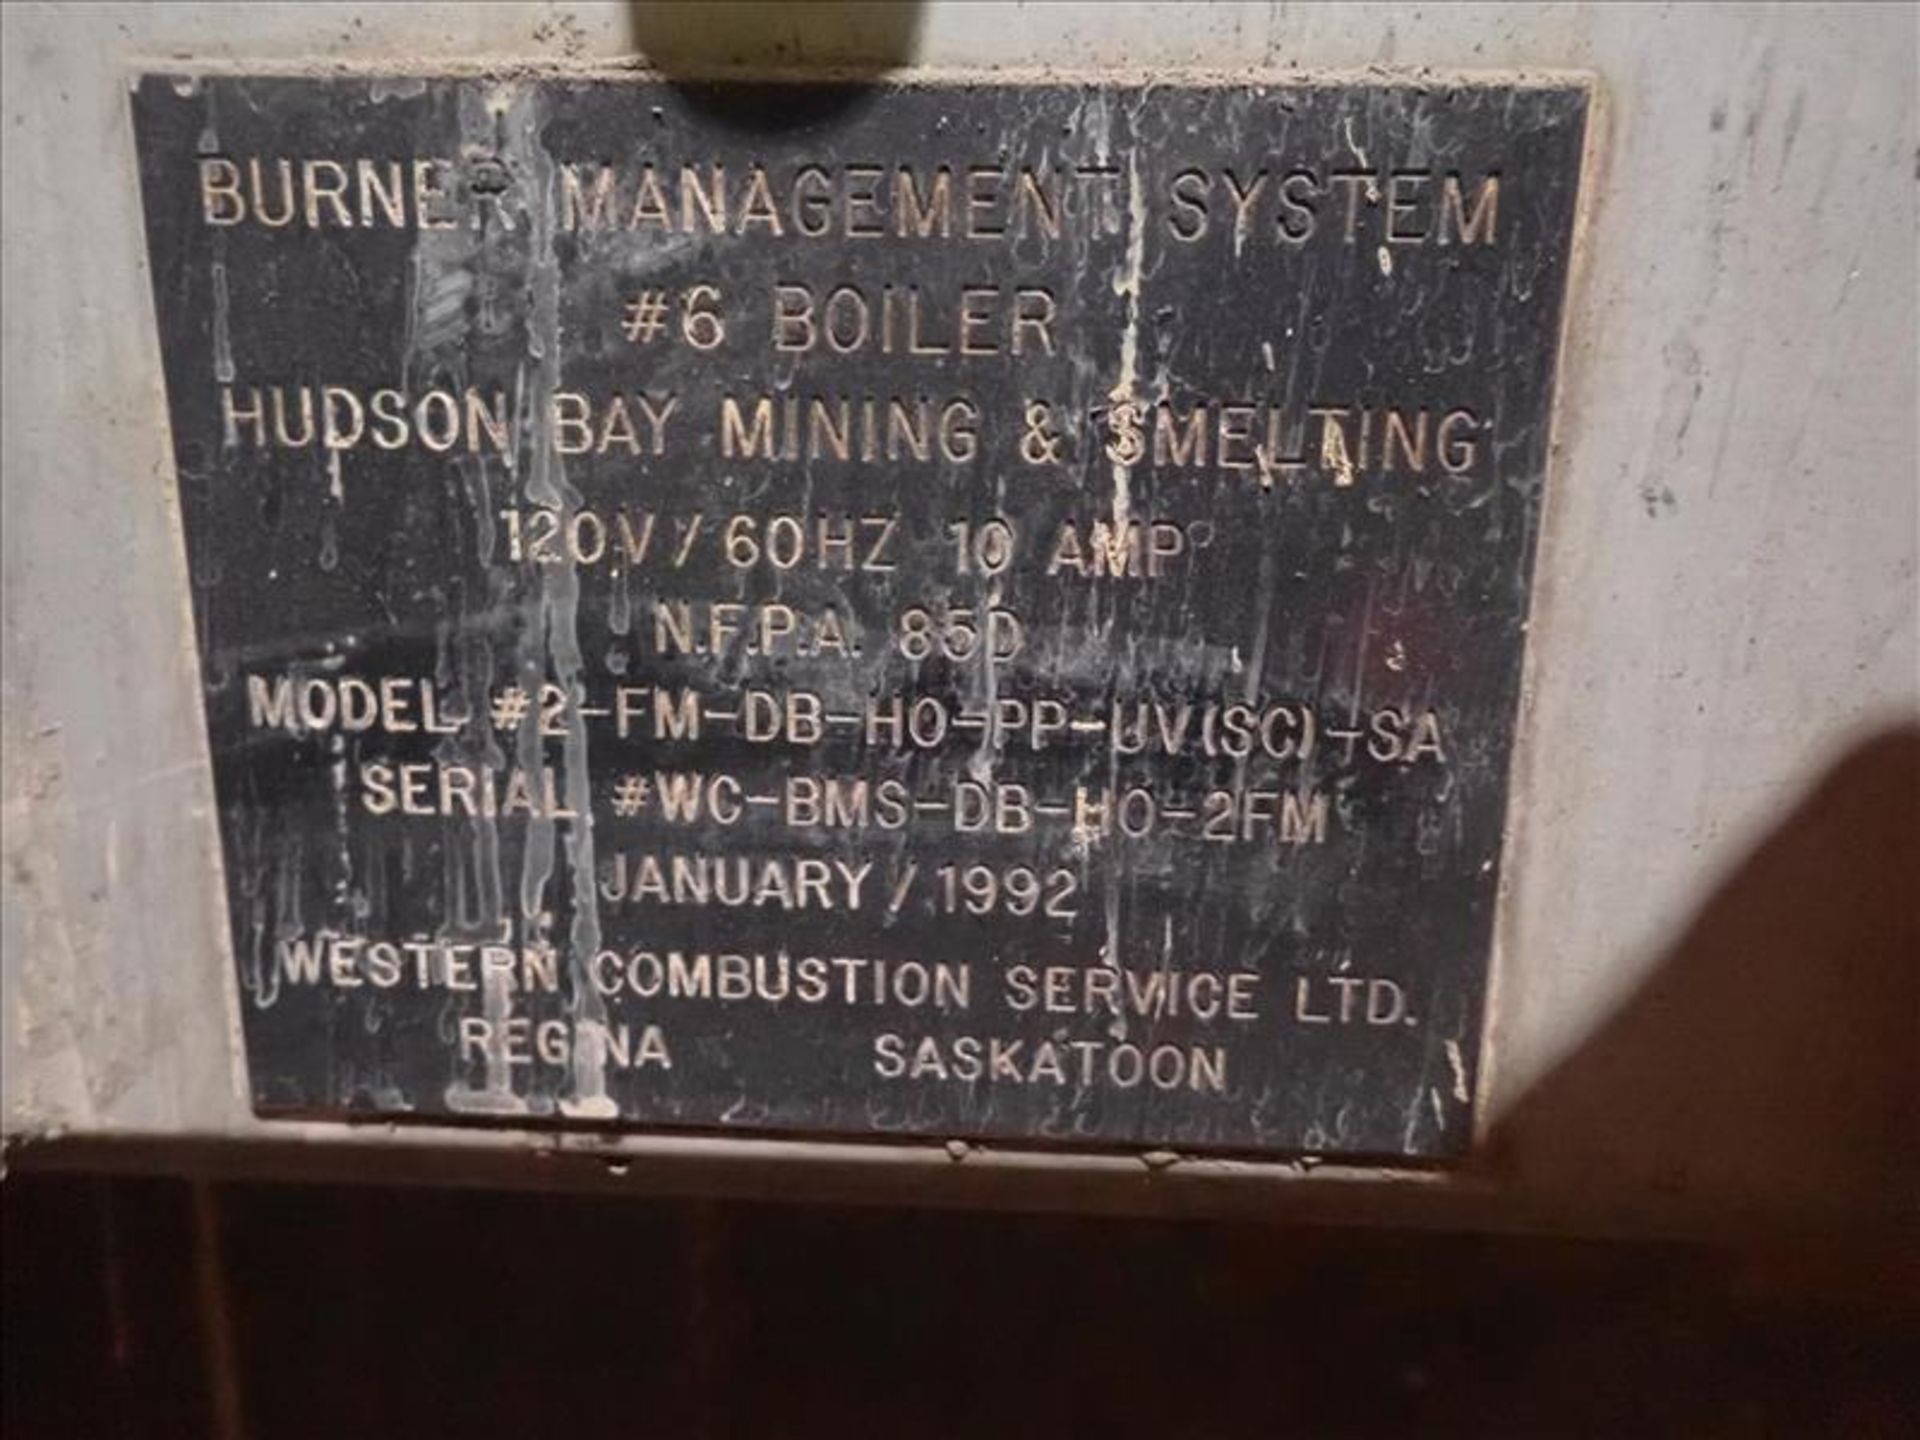 Burner Mngt. Syst. boiler, mod. 2-FM-DB-HO-PP-UV (SC)-SA, ser. no. WC-BMS-DB-HO-2FM, 1546 hp, oil ( - Image 4 of 4